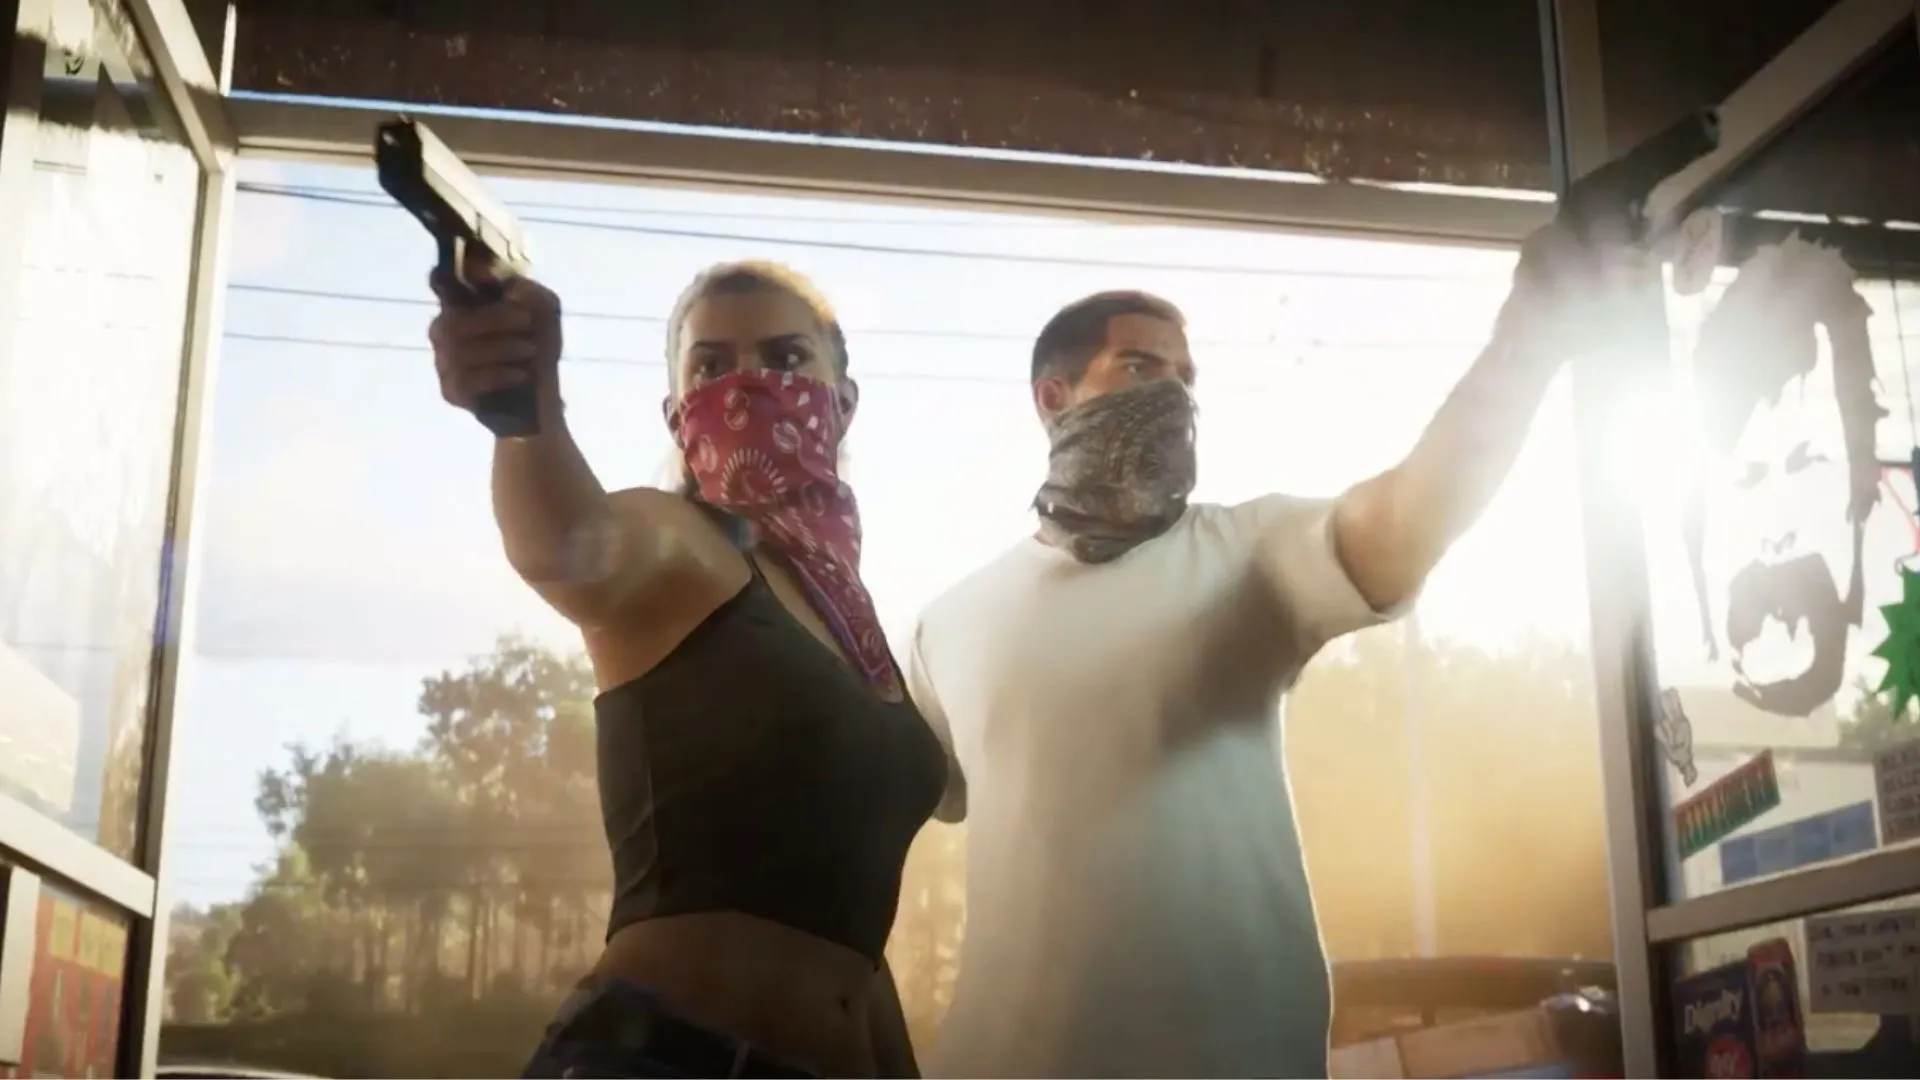 When will Rockstar Games release Trailer 2 of GTA 6?